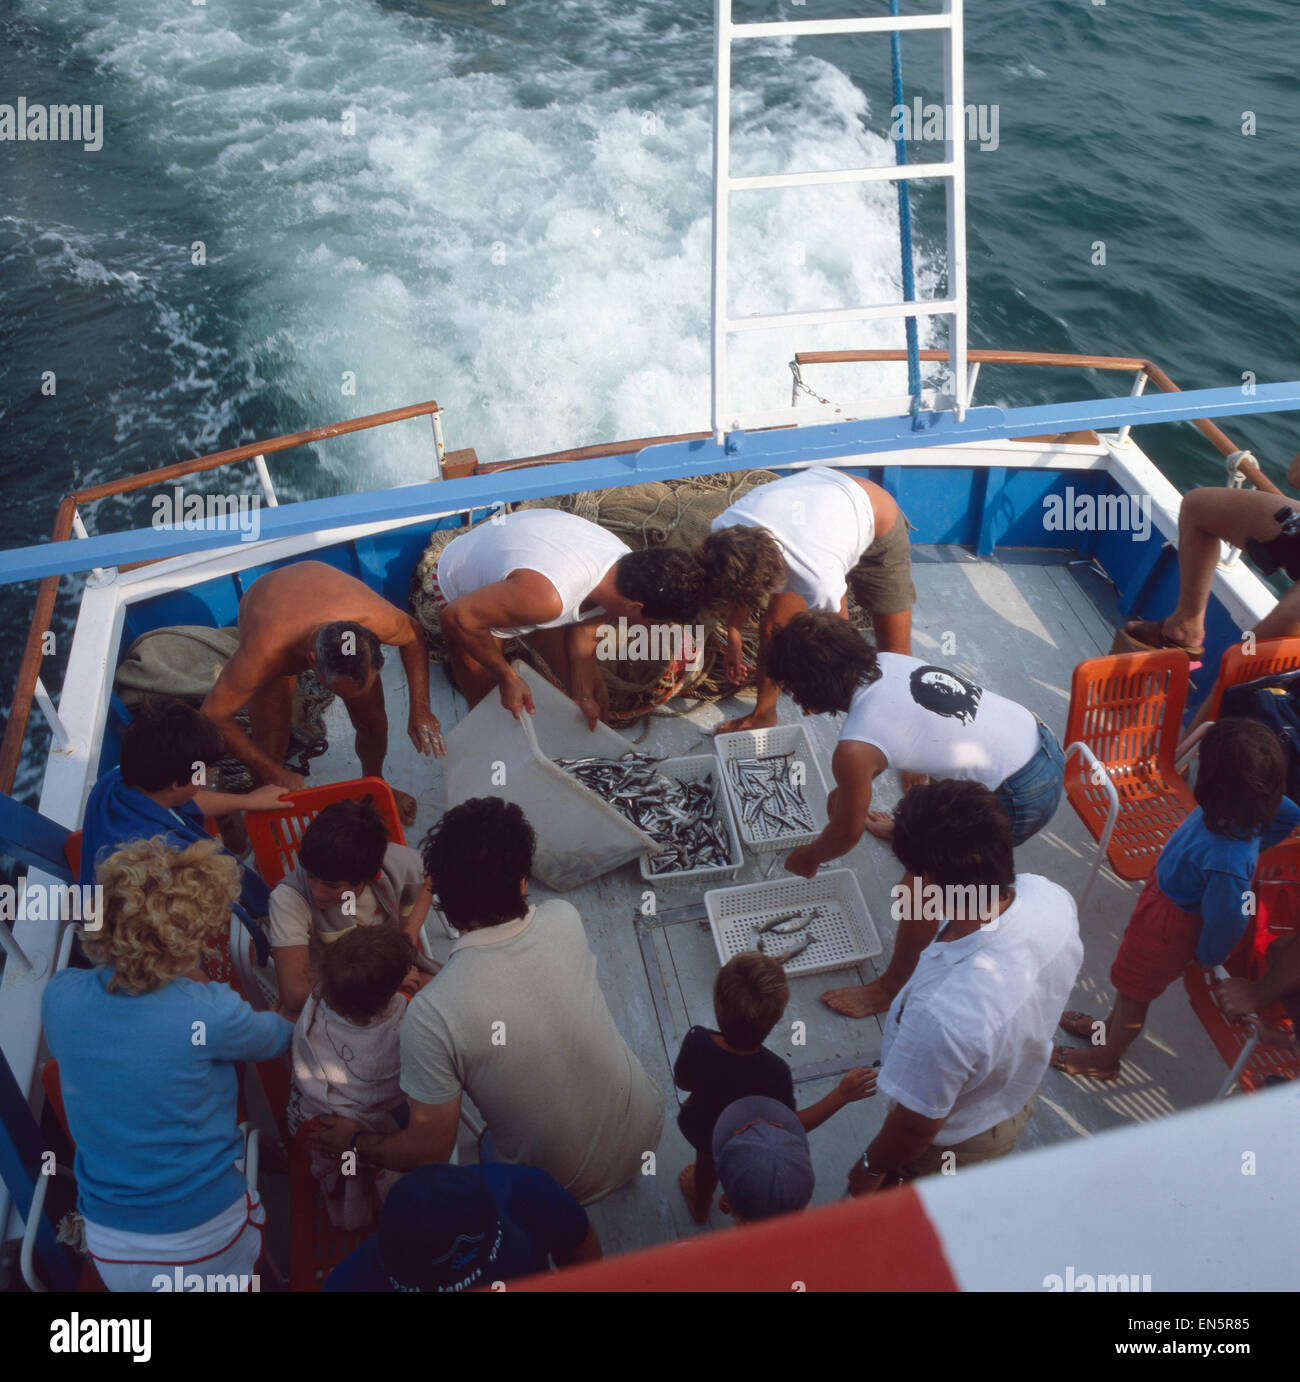 Auf Fischfang in der italienischen Adria, Italien 1970er Jahre. A fishing expedition in the Italian Adriatic Sea, Italy 1970s. Stock Photo